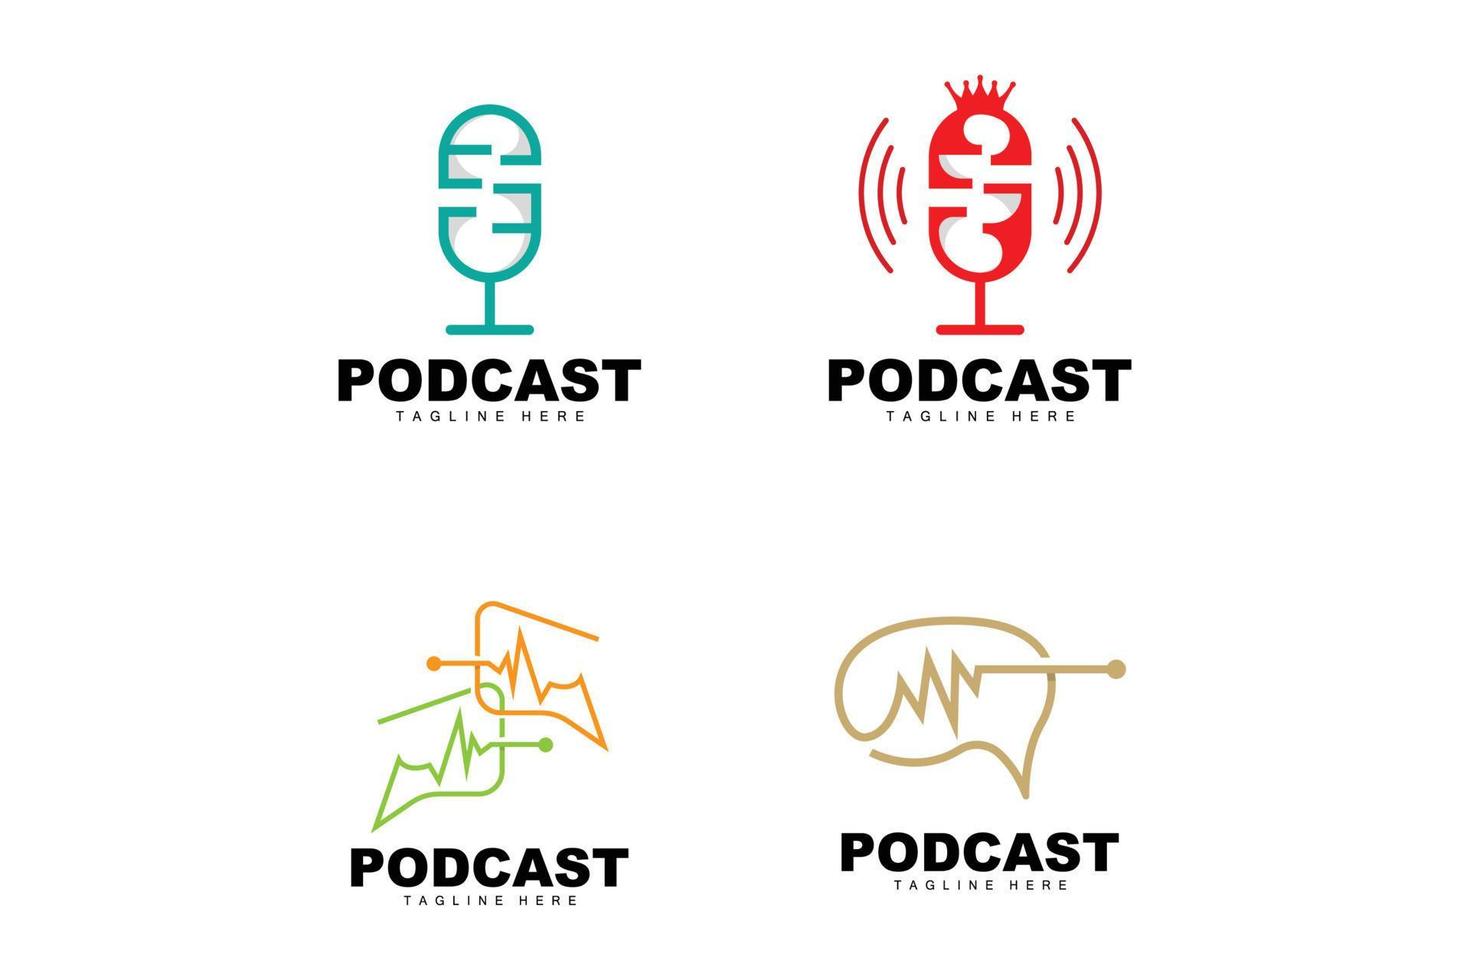 logotipo do podcast, vetor, fone de ouvido e bate-papo, design simples de microfone vintage vetor